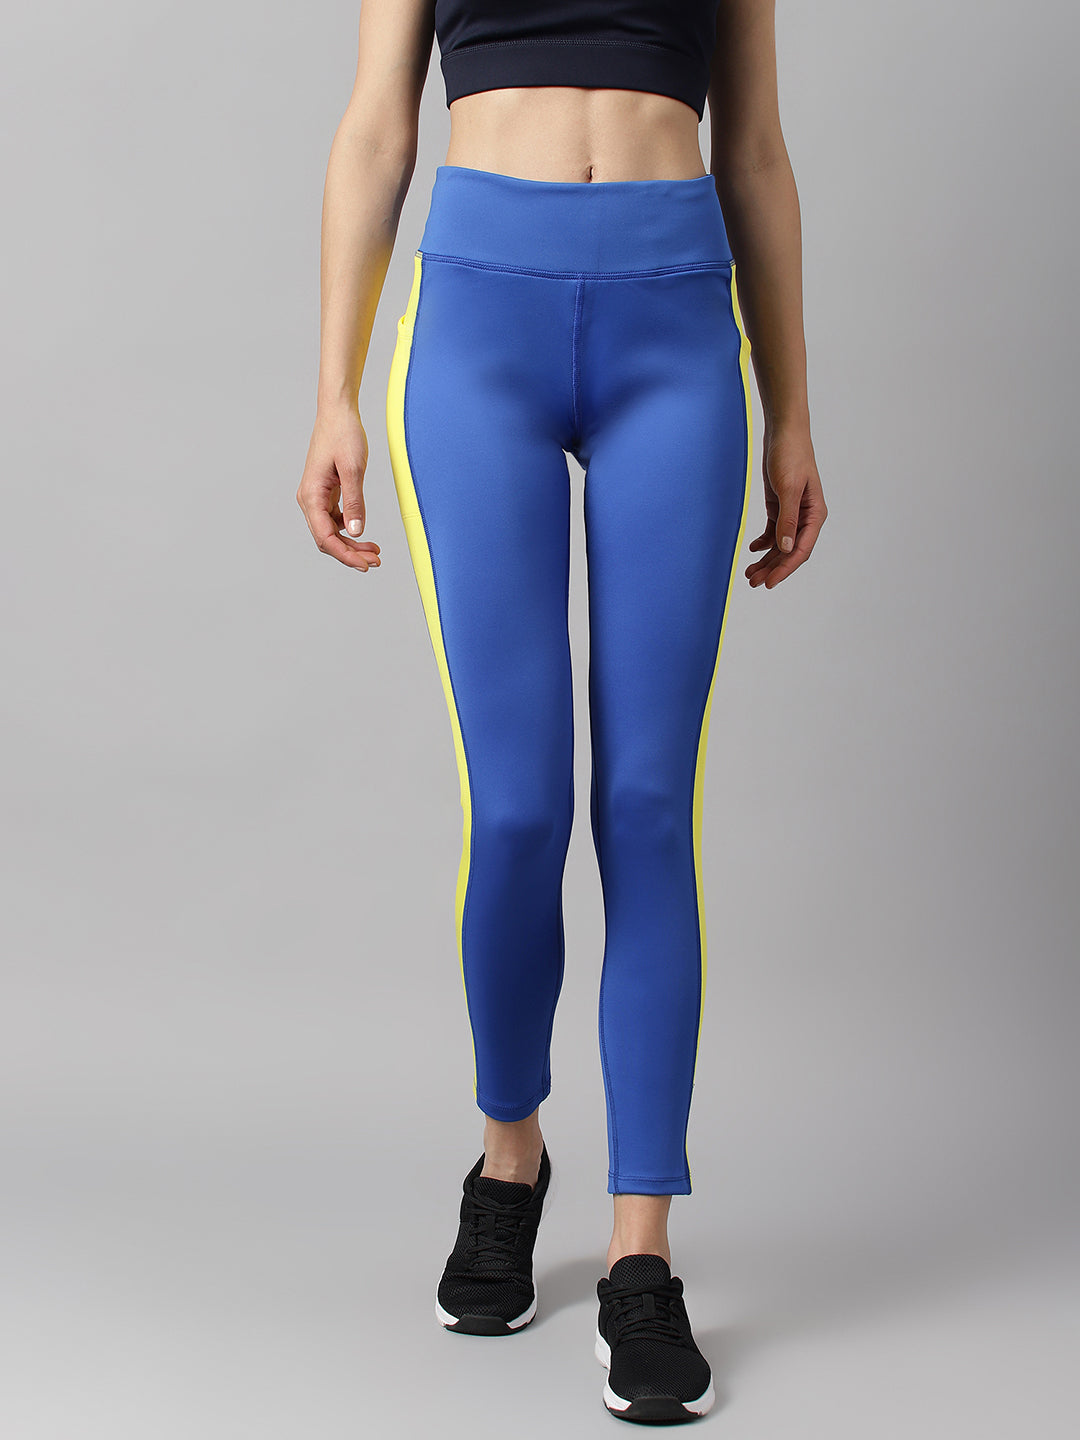 Alcis Women Printed Cobalt Blue Colour Blocked Anti-Static Slim-Fit Full-Length Sports Tights